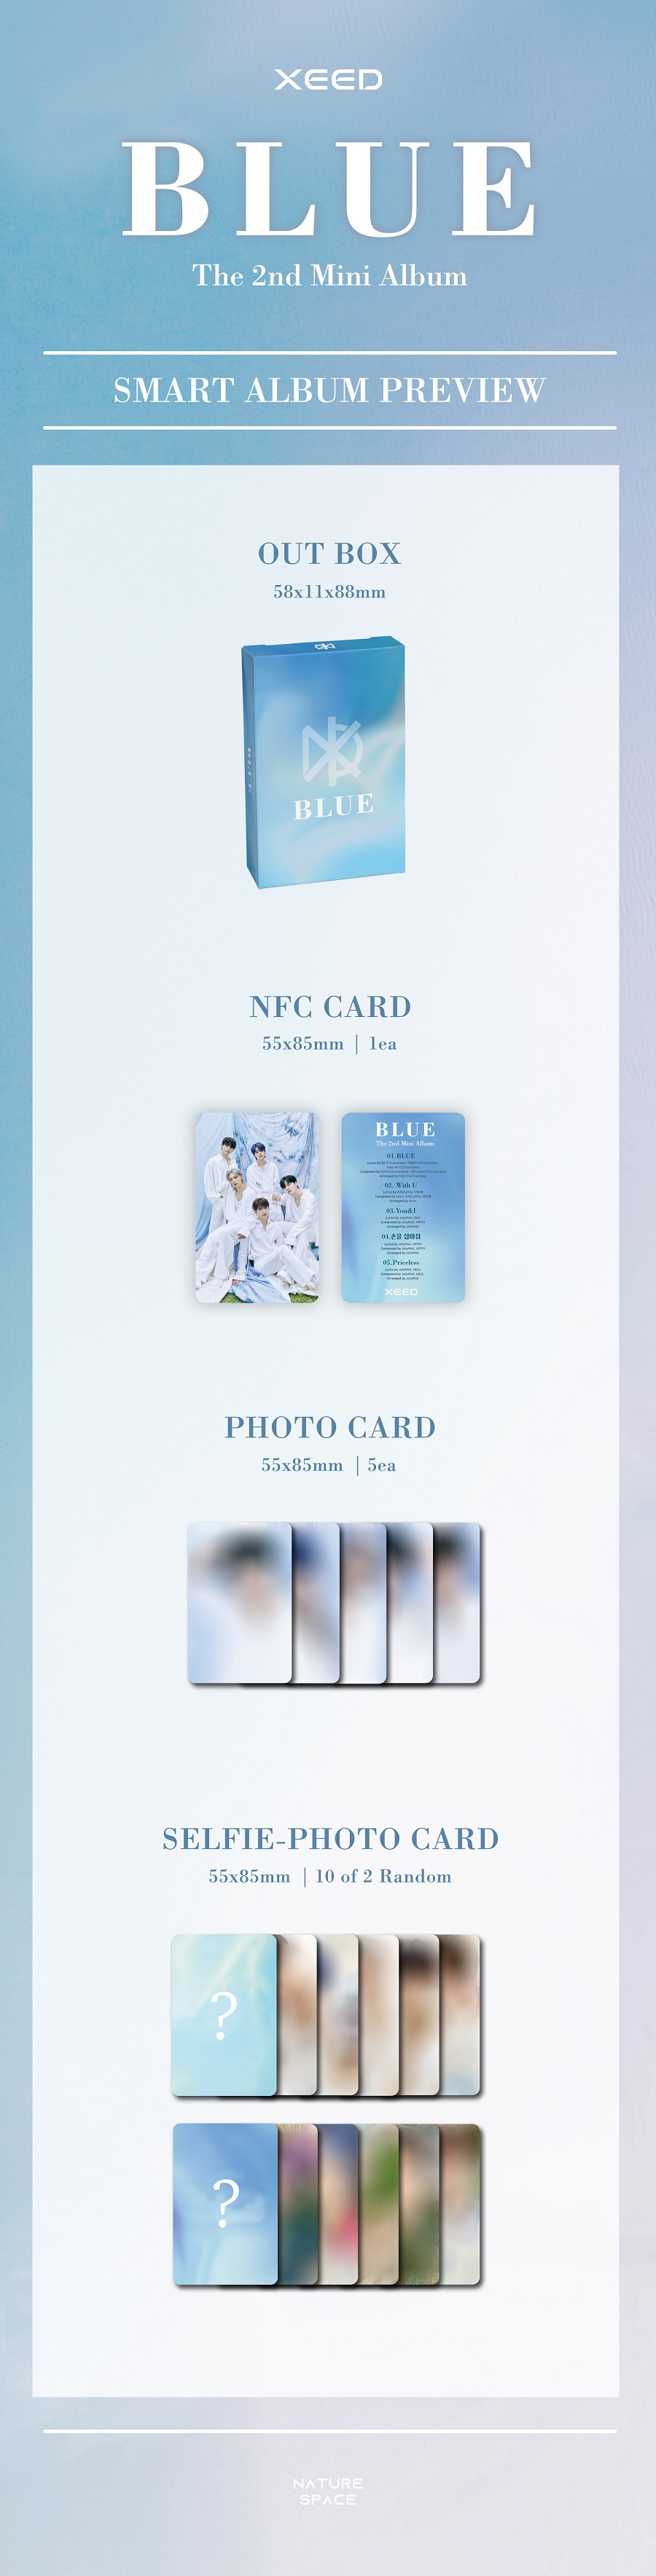 XEED(시드) - The 2nd Mini Album [BLUE] (SMC ver.)